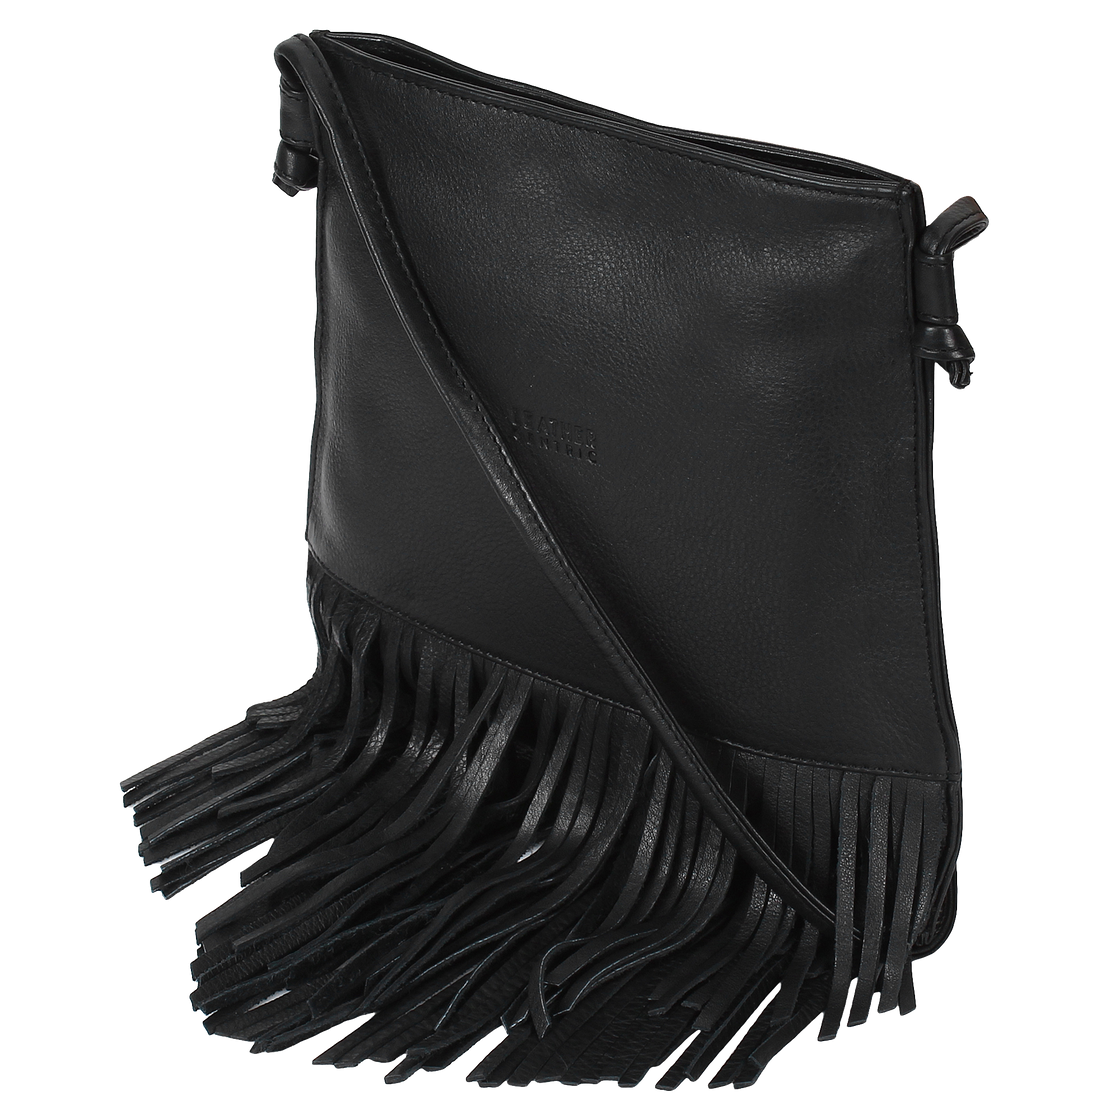 Black Leather Bag Transparent File | PNG Play